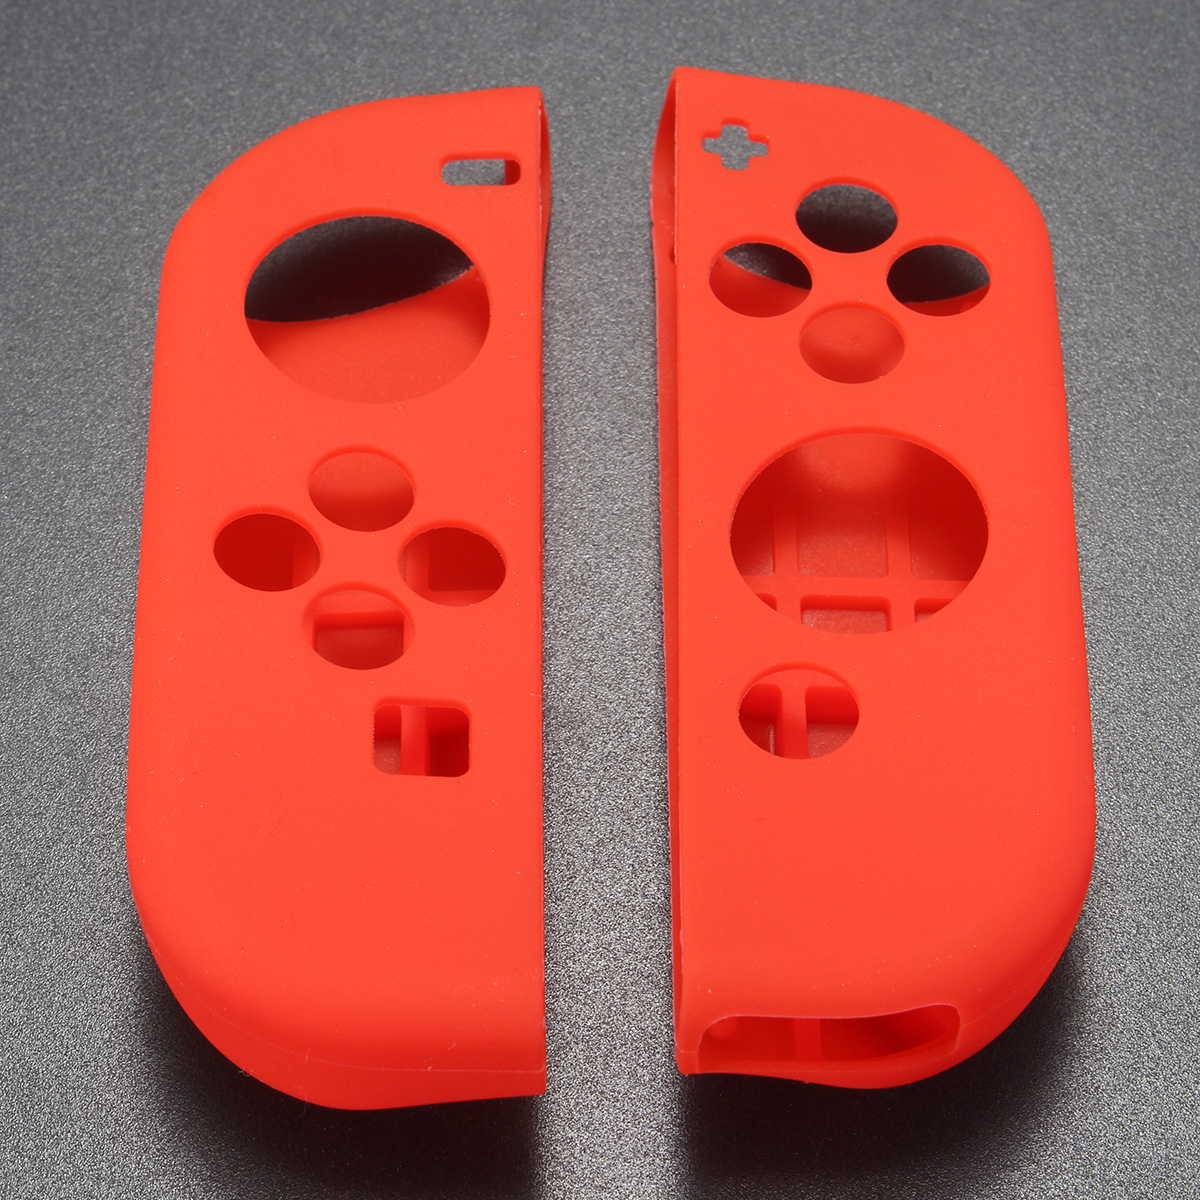 Silicon Case Protective Impact Resistant Rubber Skin Cover For Nintendo Switch Joy-Con Controller 75